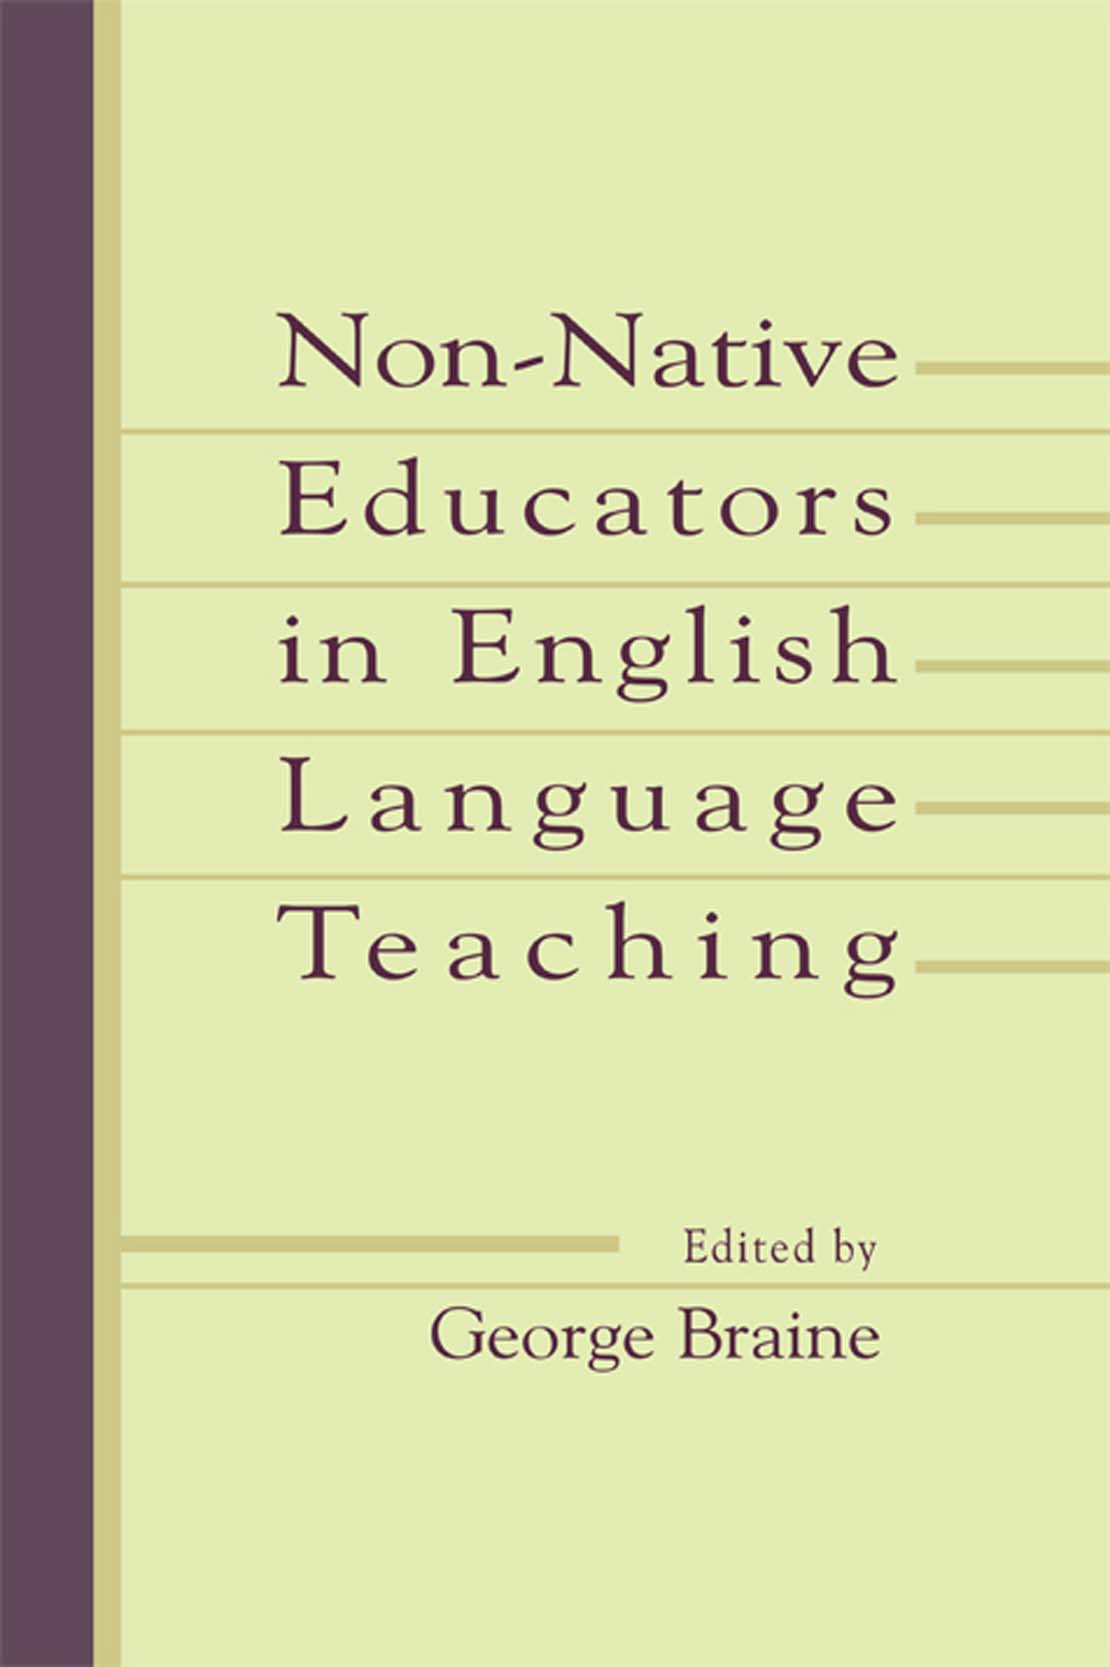 Non-native Educators in English Language Teaching - image 1